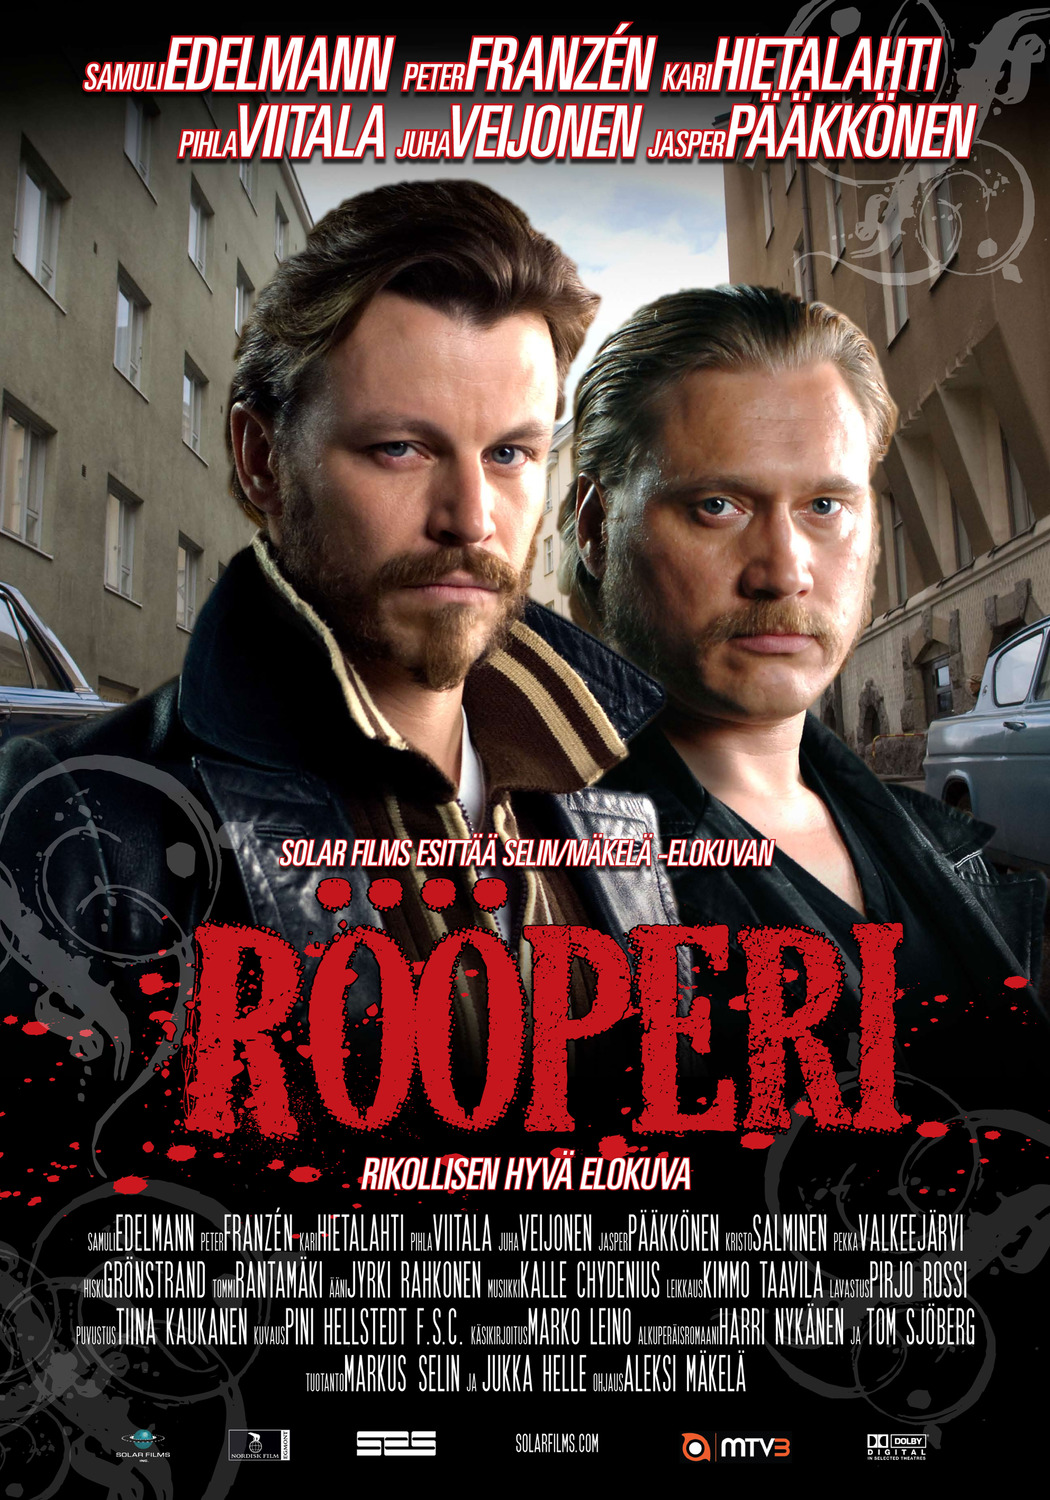 Extra Large Movie Poster Image for Rööperi 